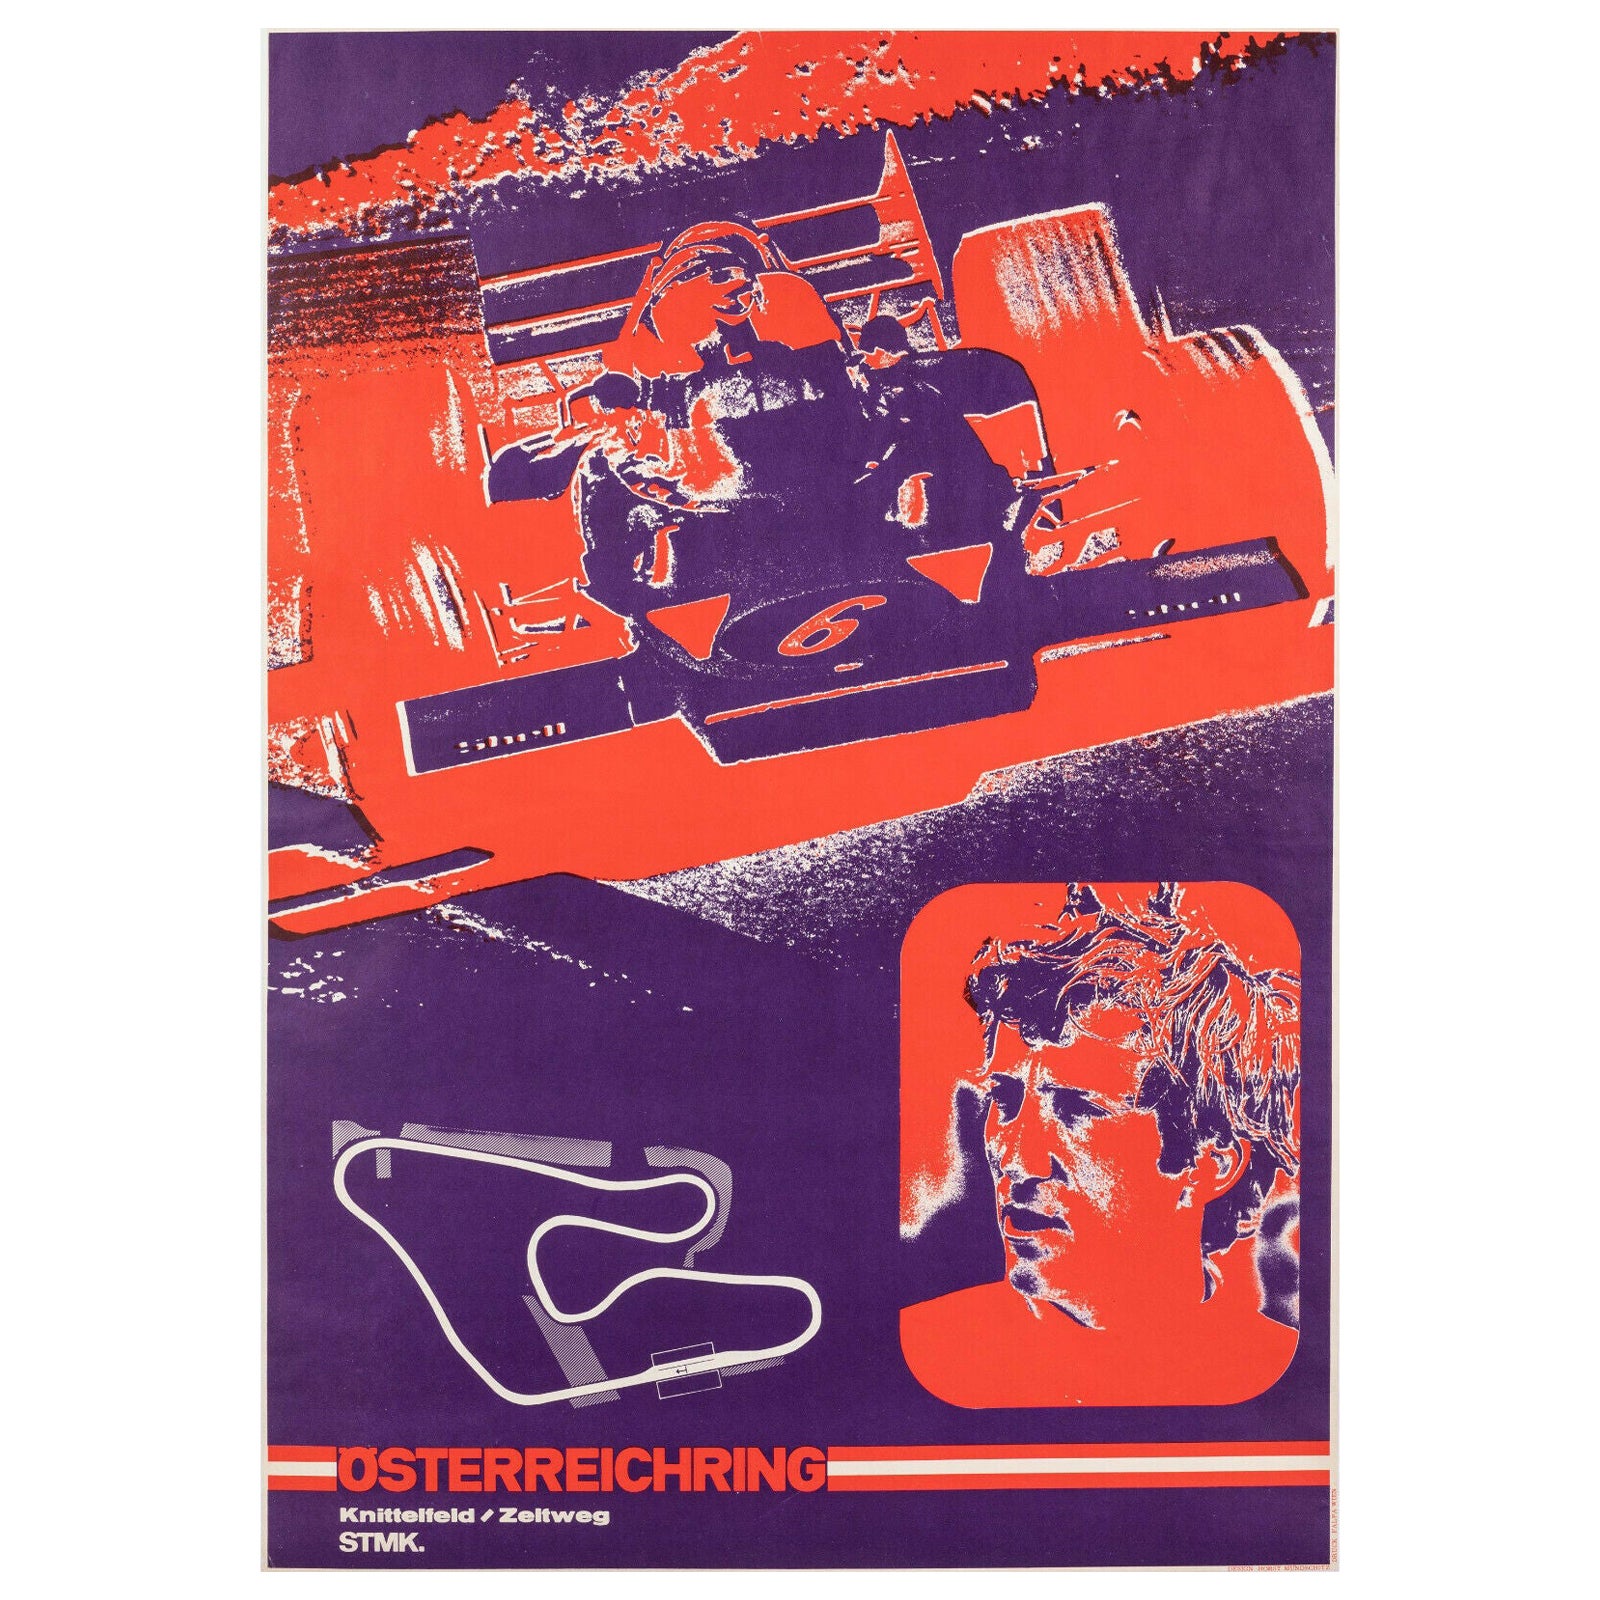 Original Vintage Poster-Österreichring-F1-Circuit-Car Circuit, c.1987 For Sale